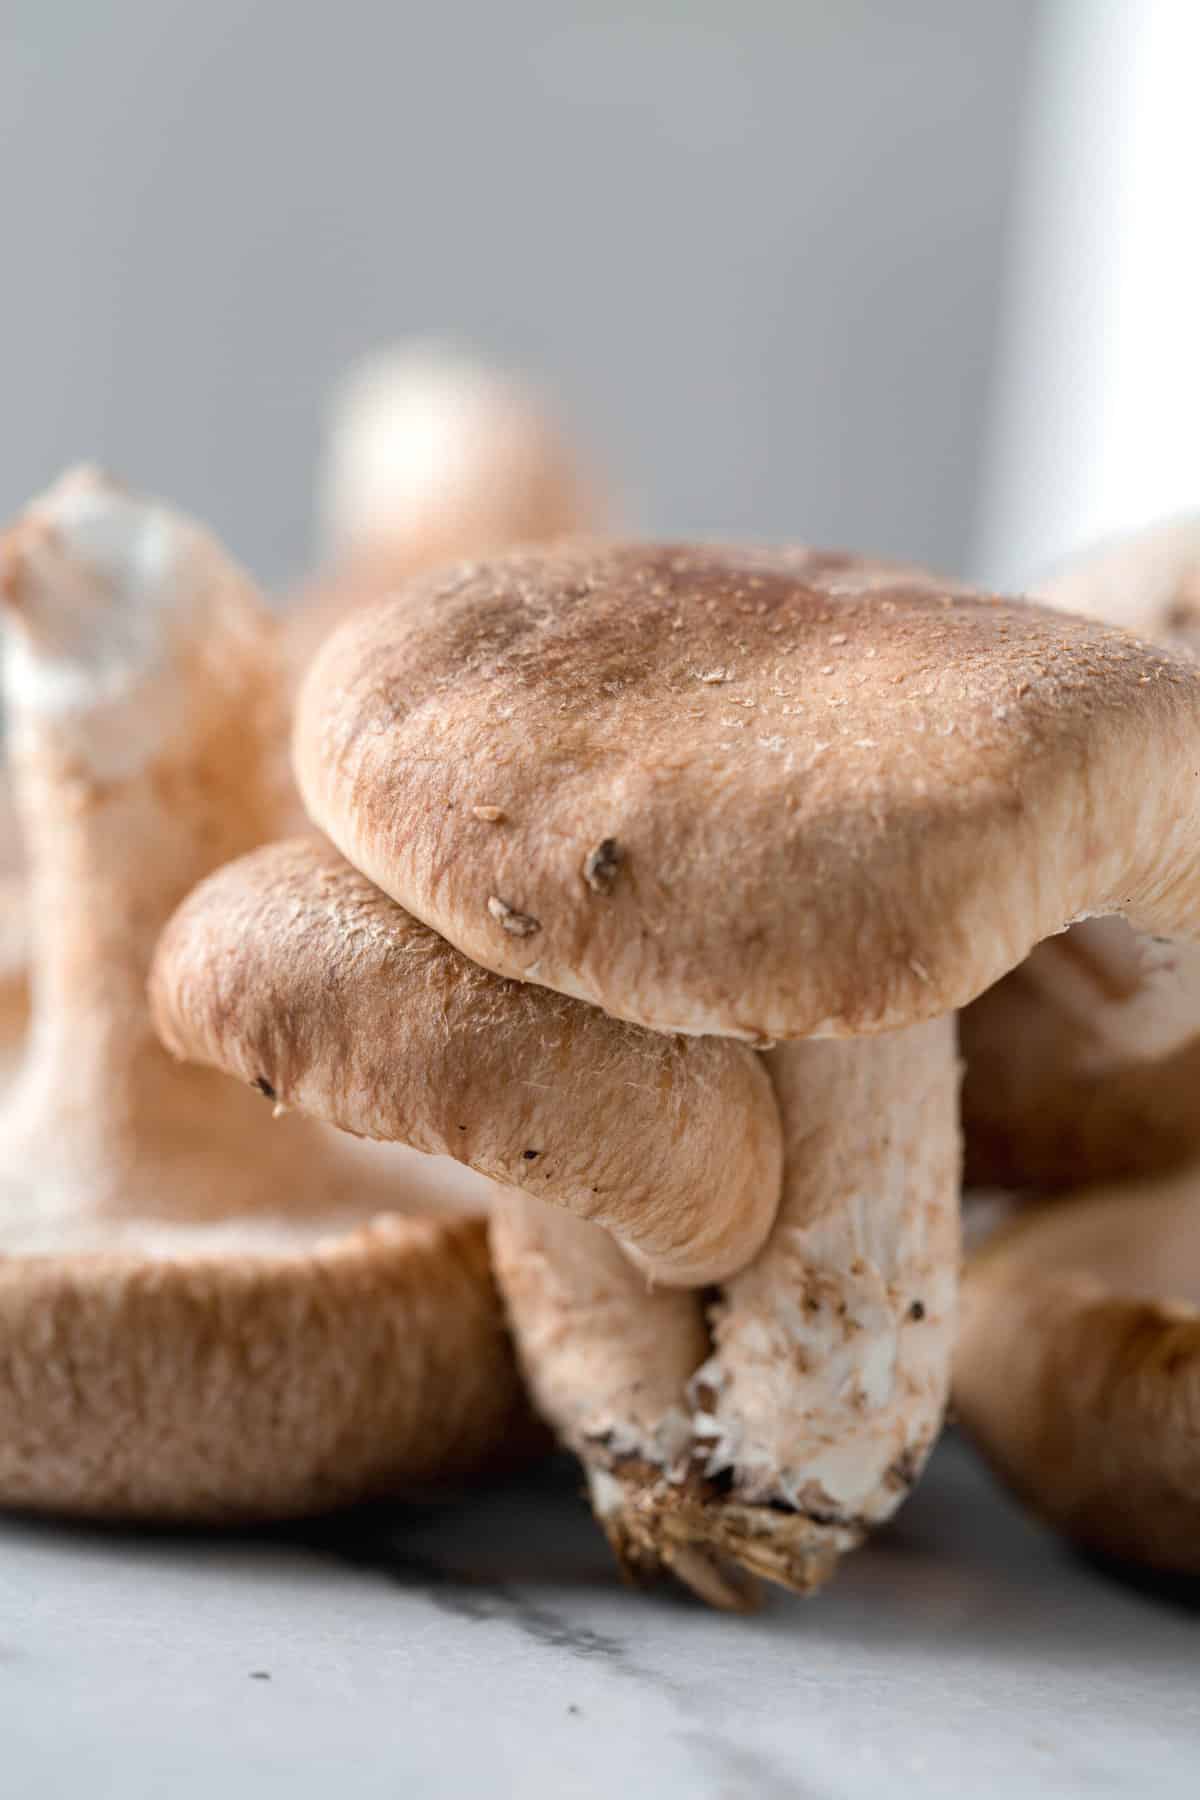 up close image of a small shiitake mushroom growing under a large shiitake mushroom